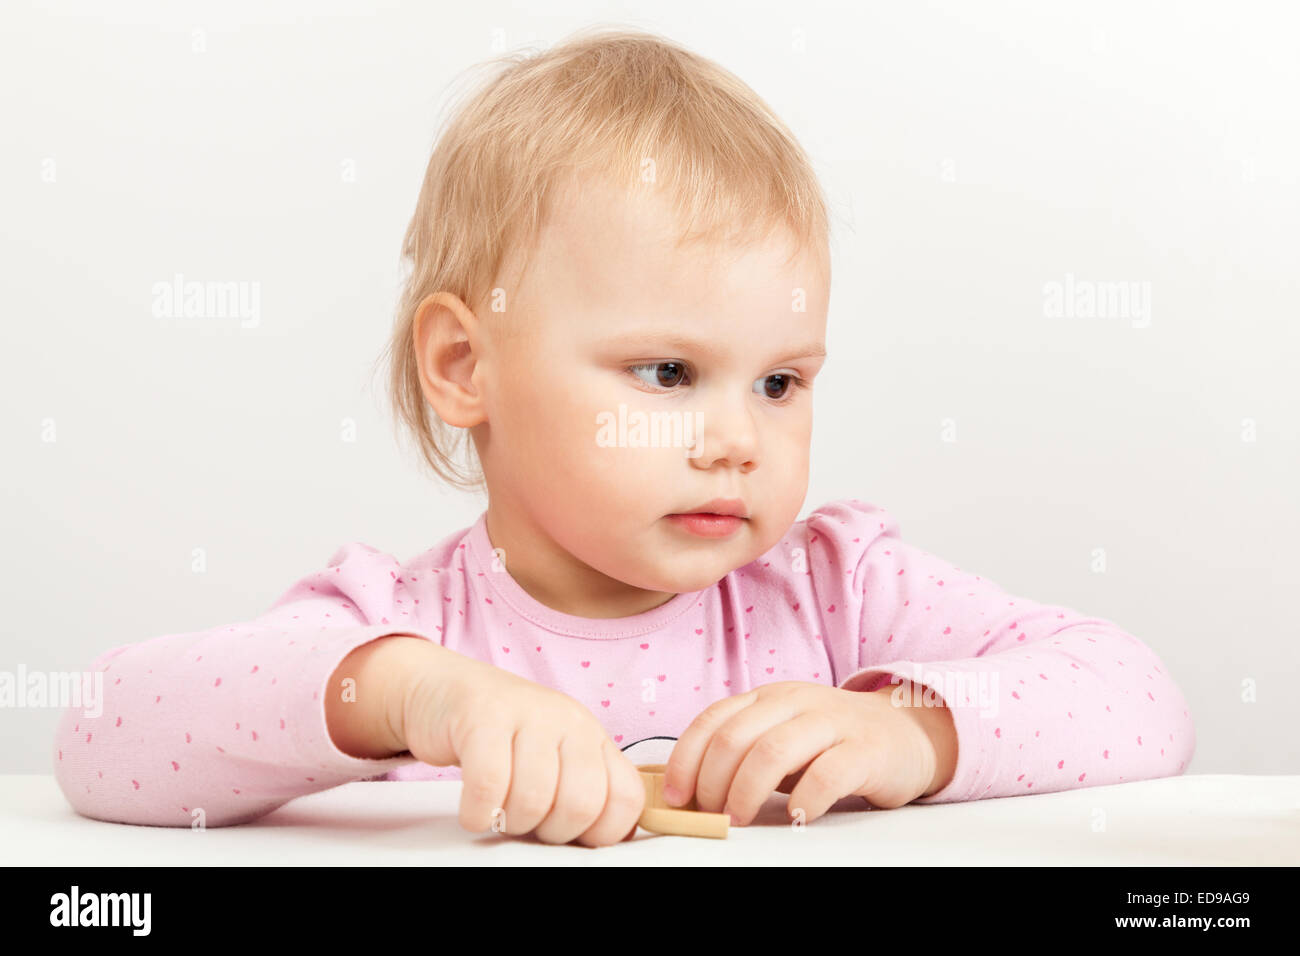 Caucasian baby girl in pink on white background, closeup studio portrait Stock Photo